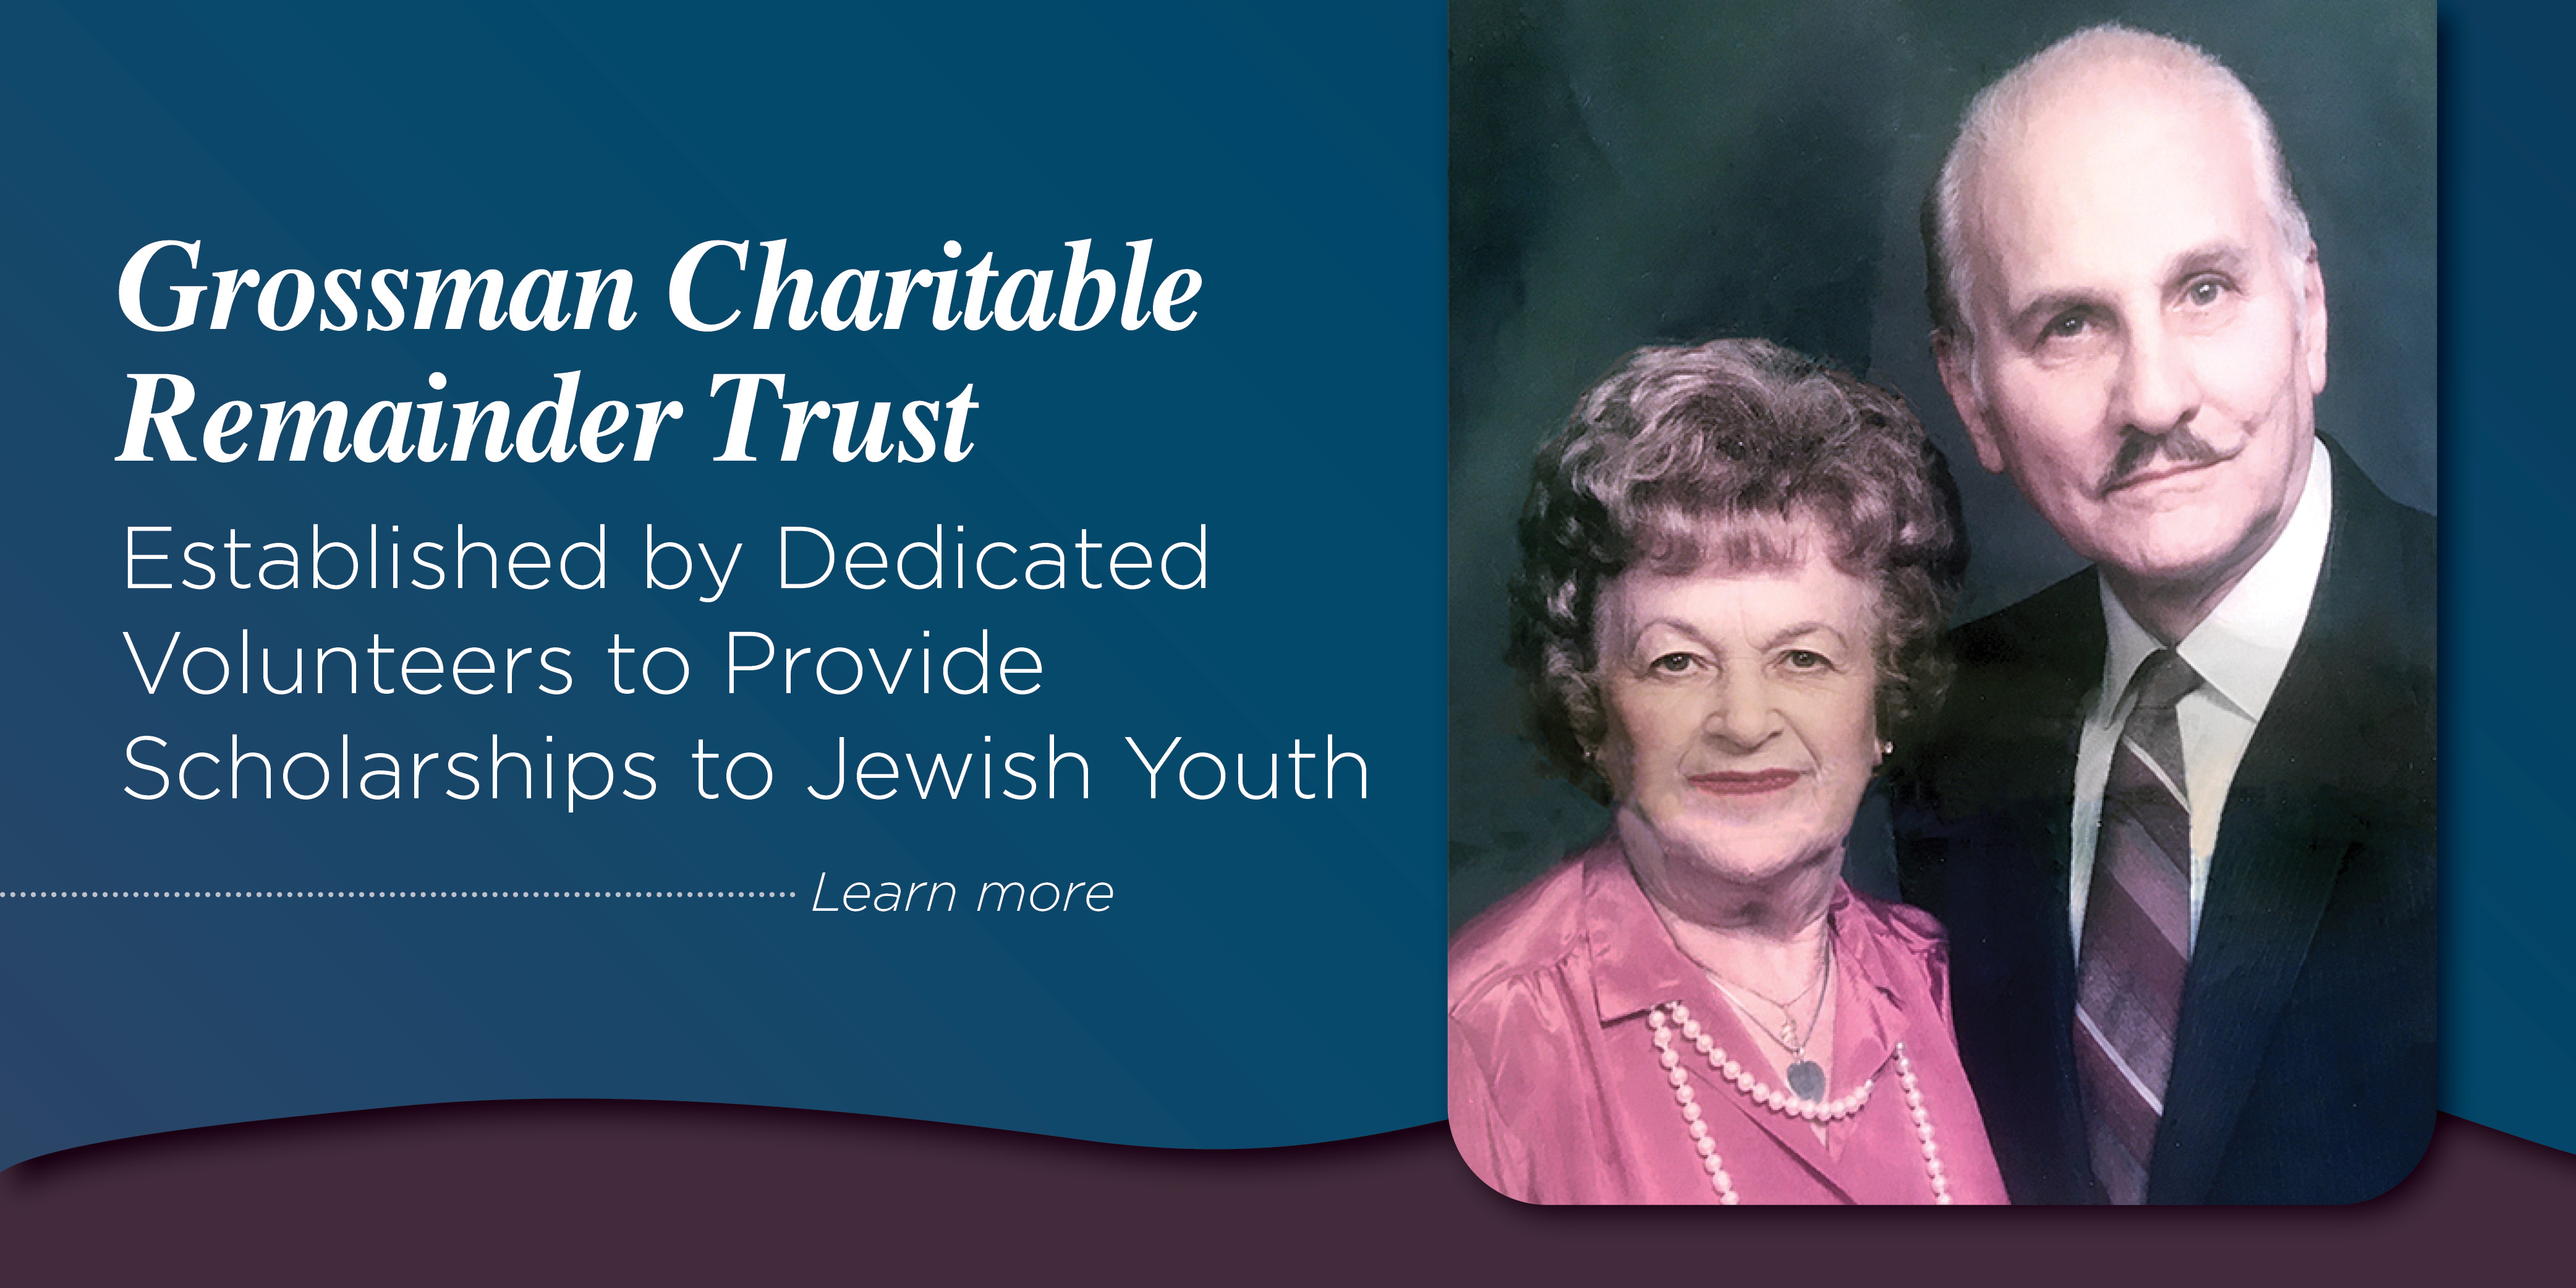 Grossman Charitable Remainder Trust